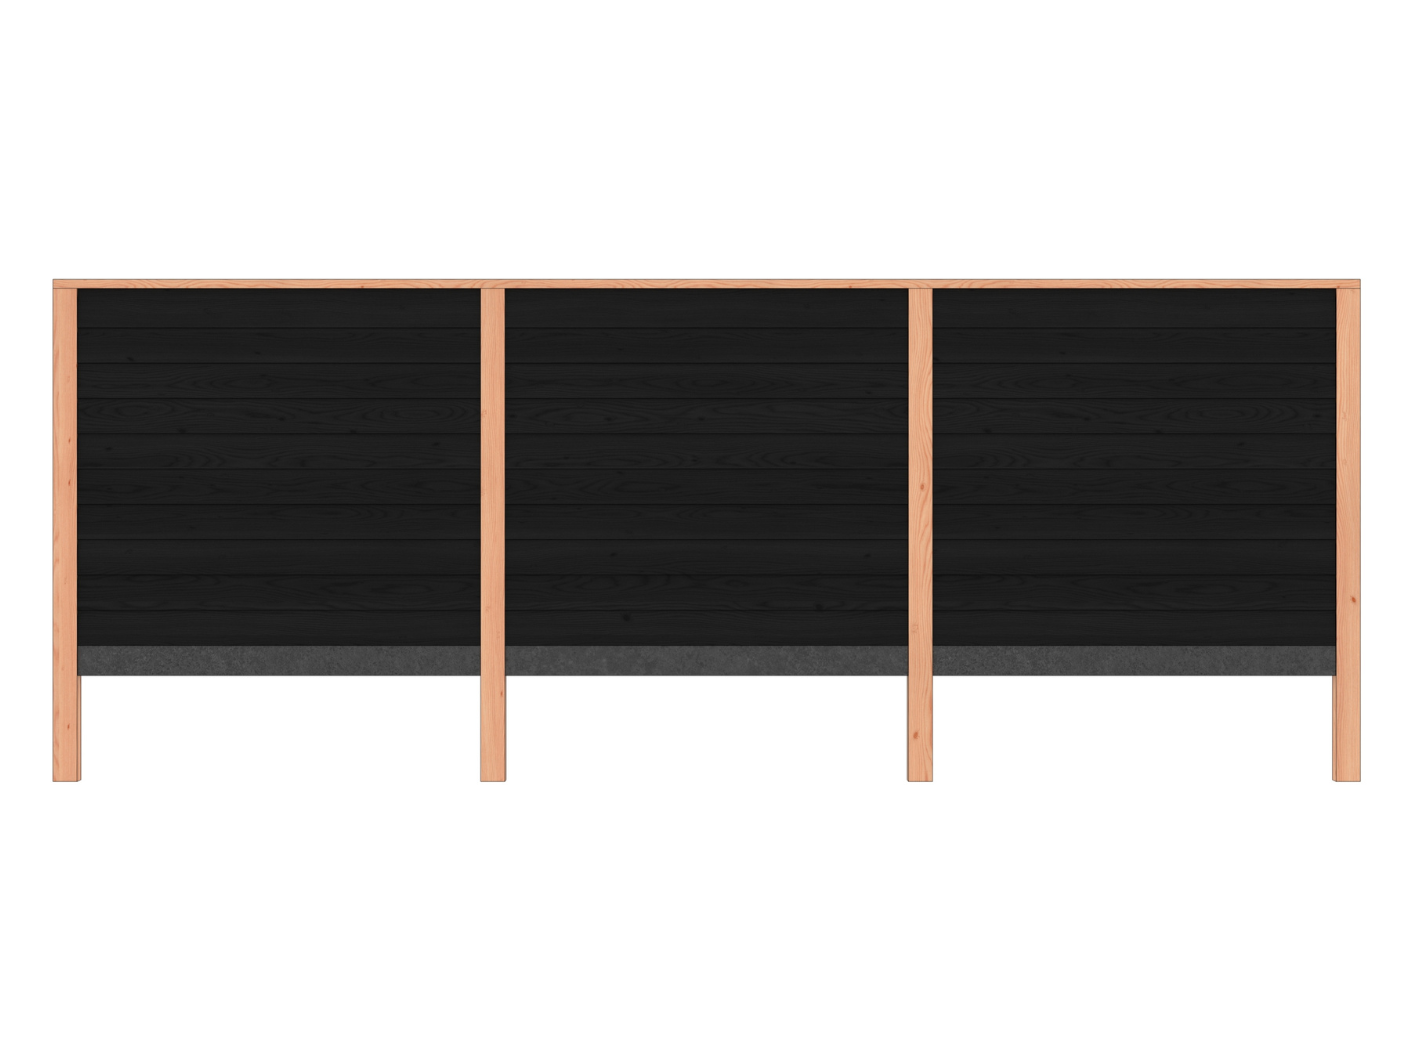 Schutting zweeds rabat zwart gespoten, 200 (B) x 180 (H) cm, dubbelzijdig